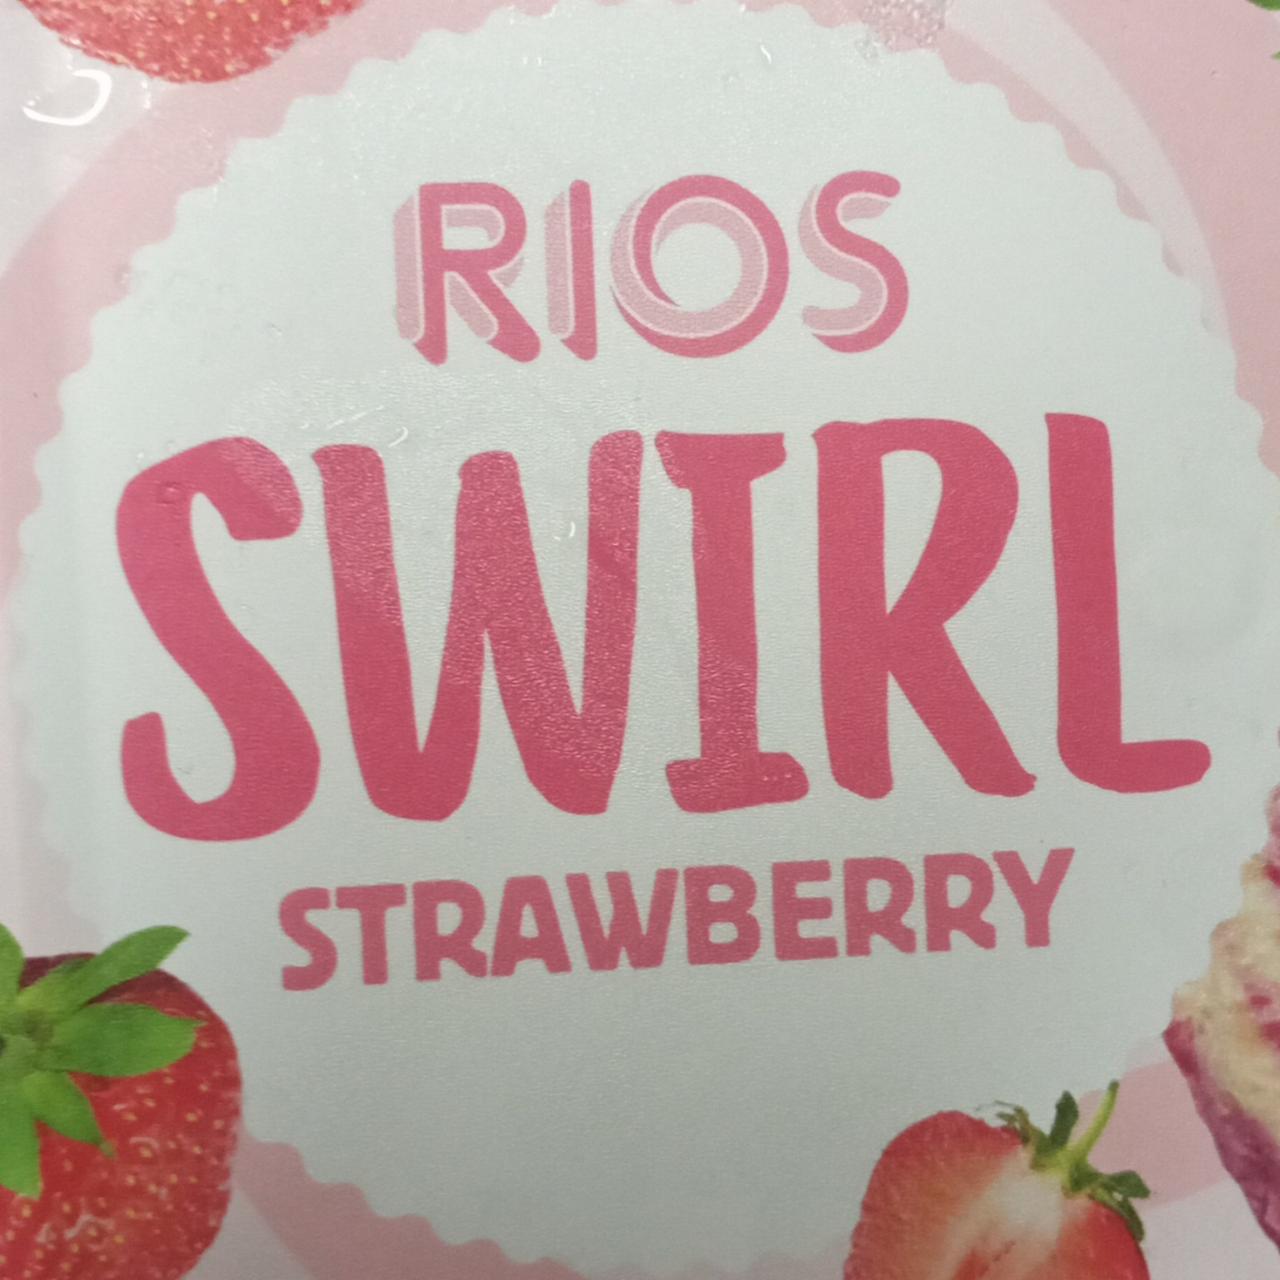 Képek - Swirl strawberry Rios